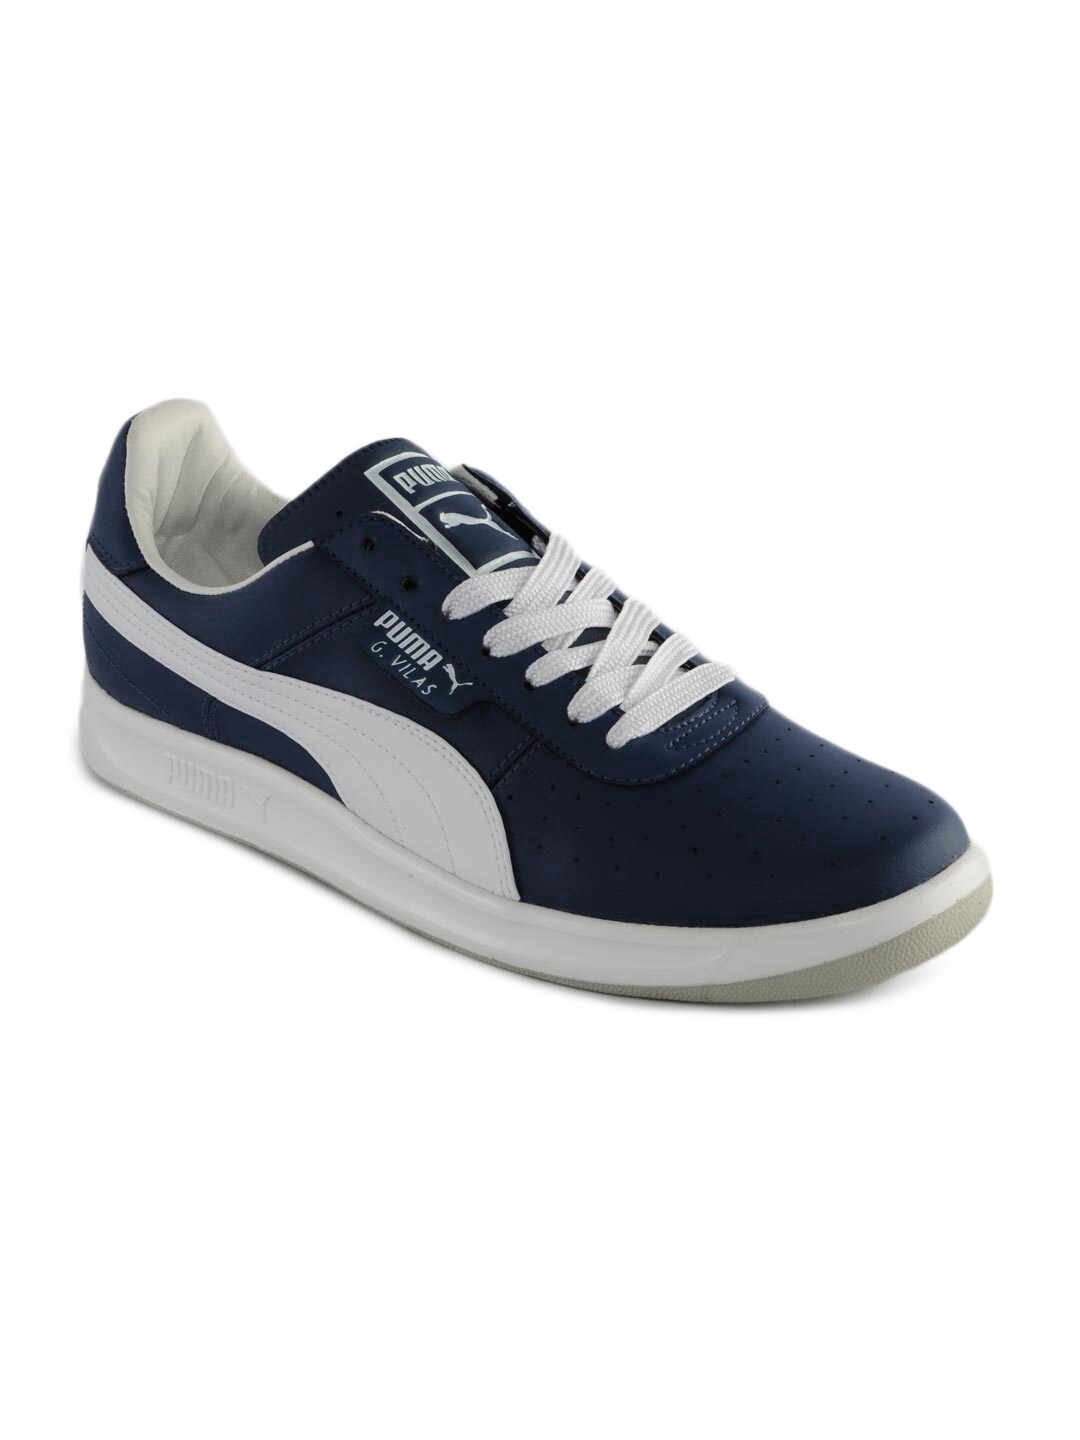 Puma Men G. Vilas 2 Basics Blue Shoes